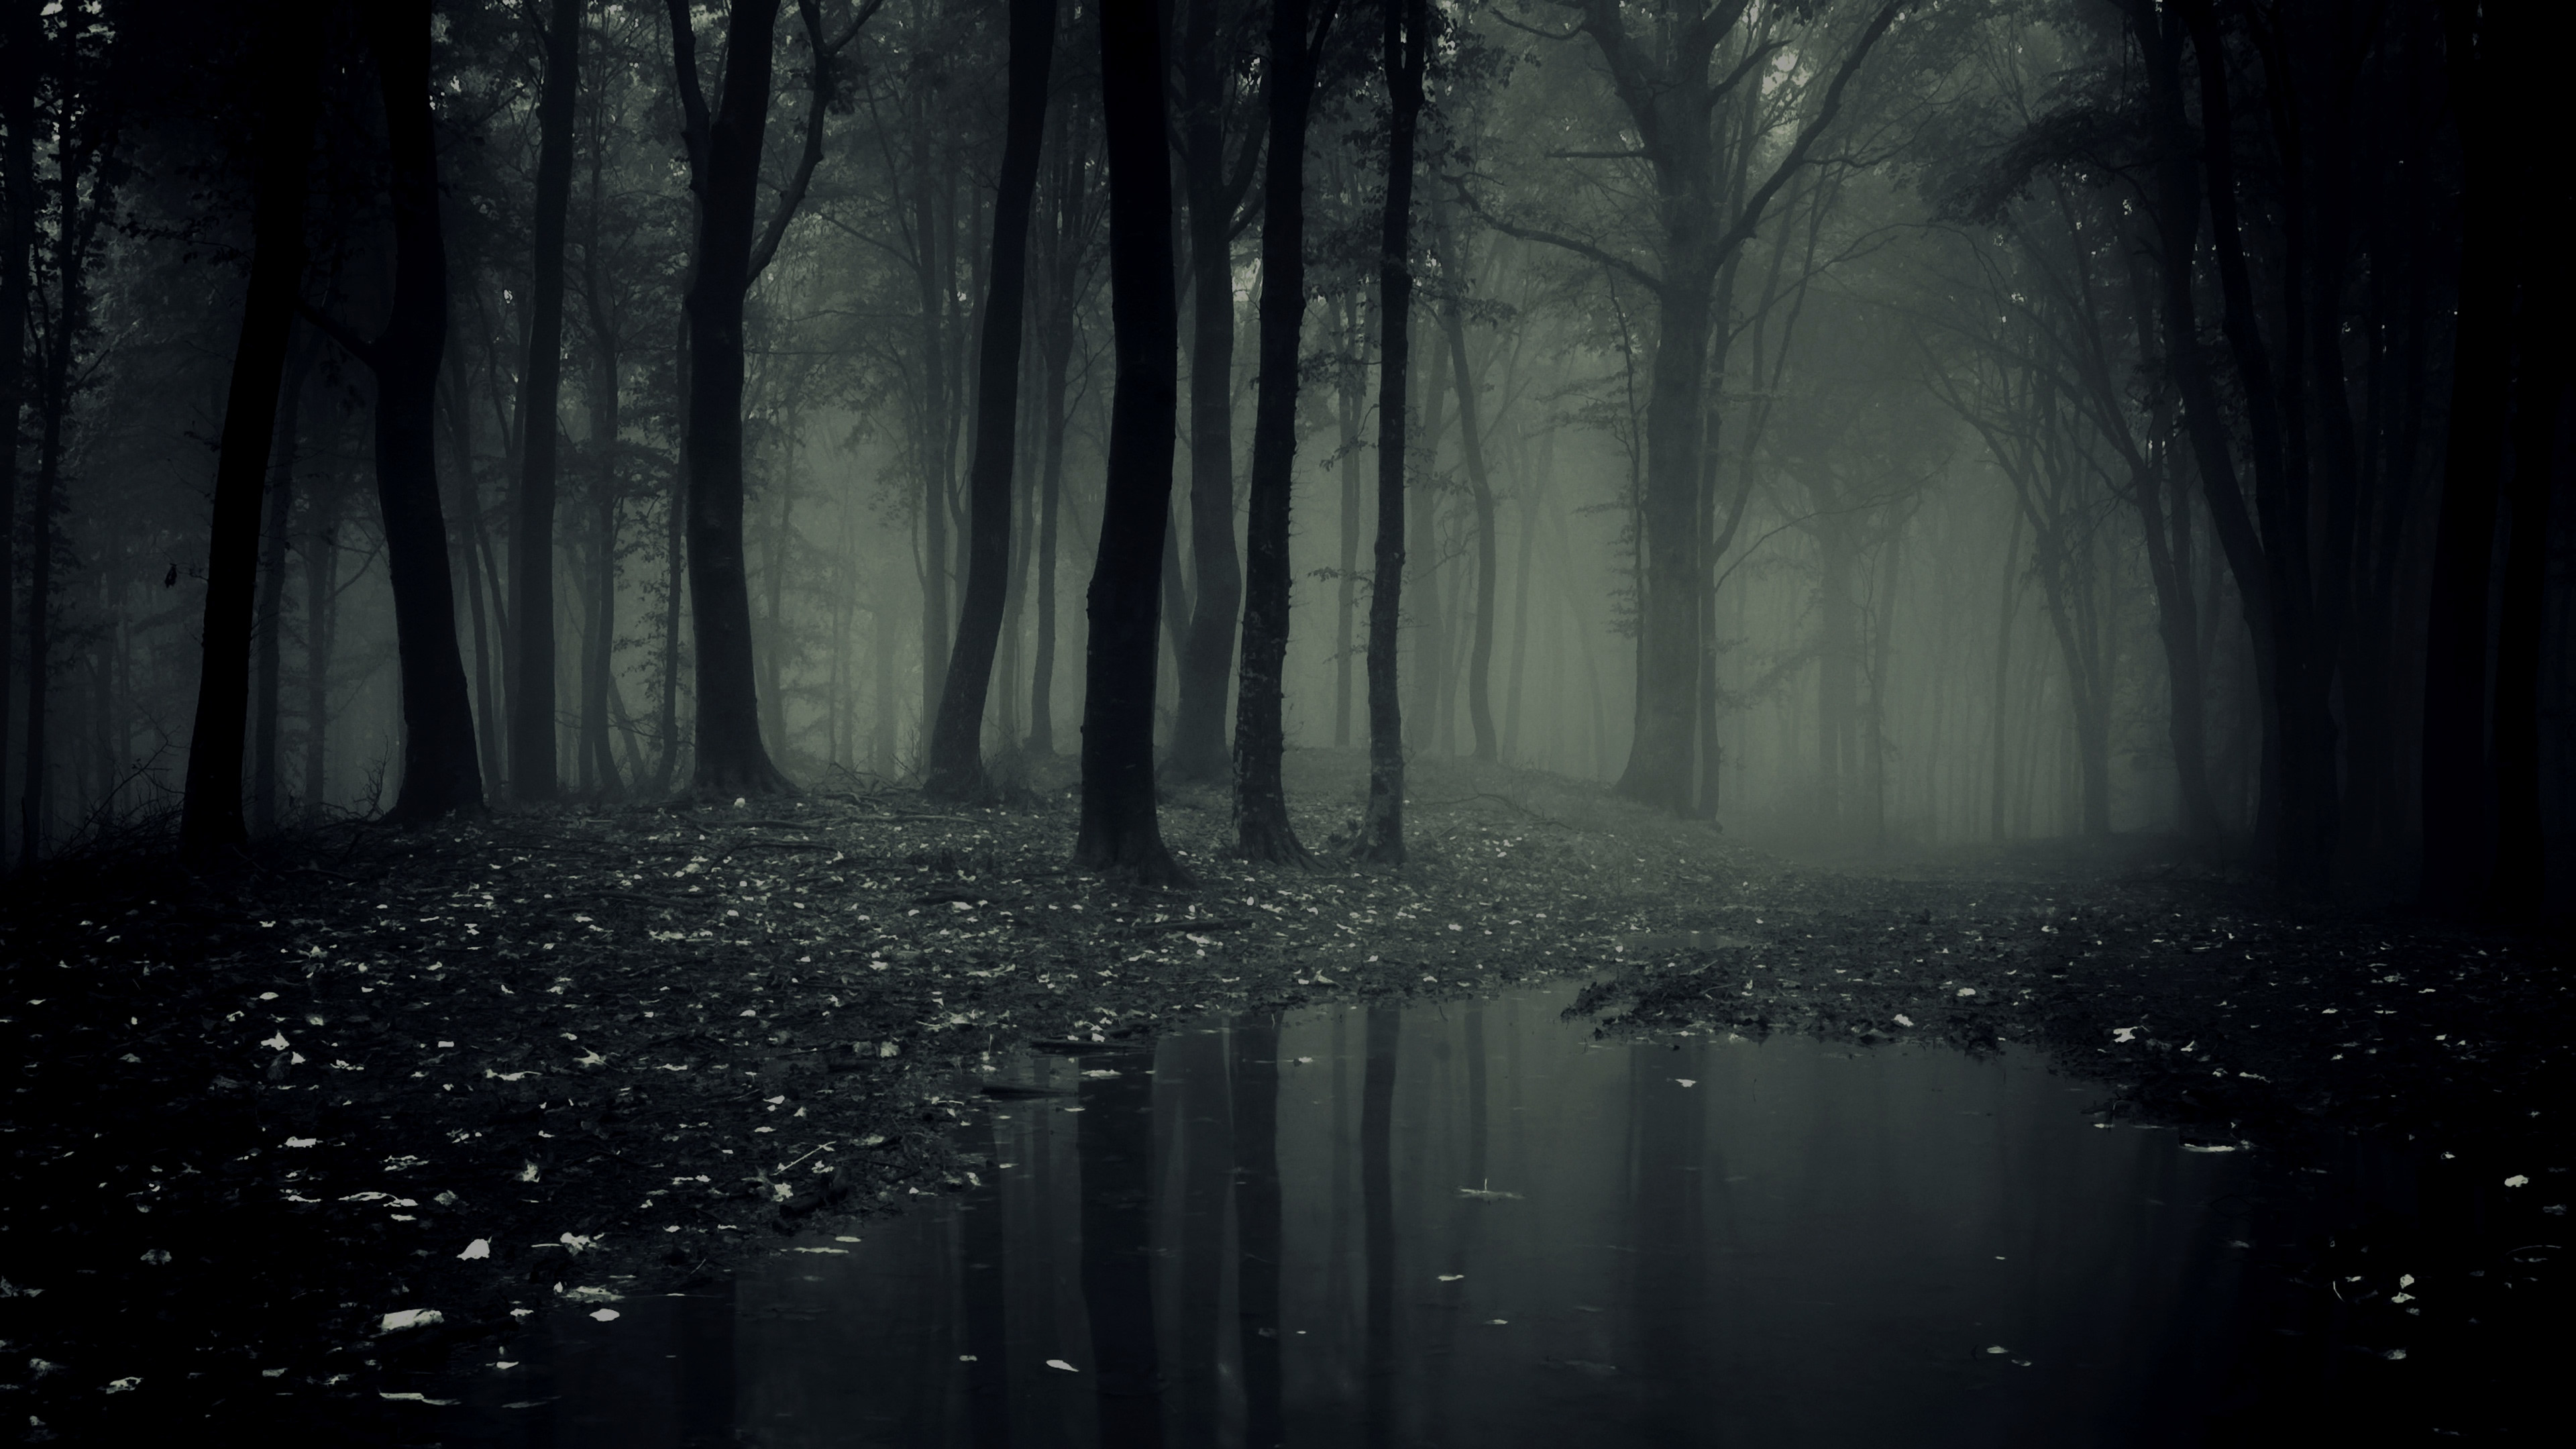 dark nightmares haunted forest